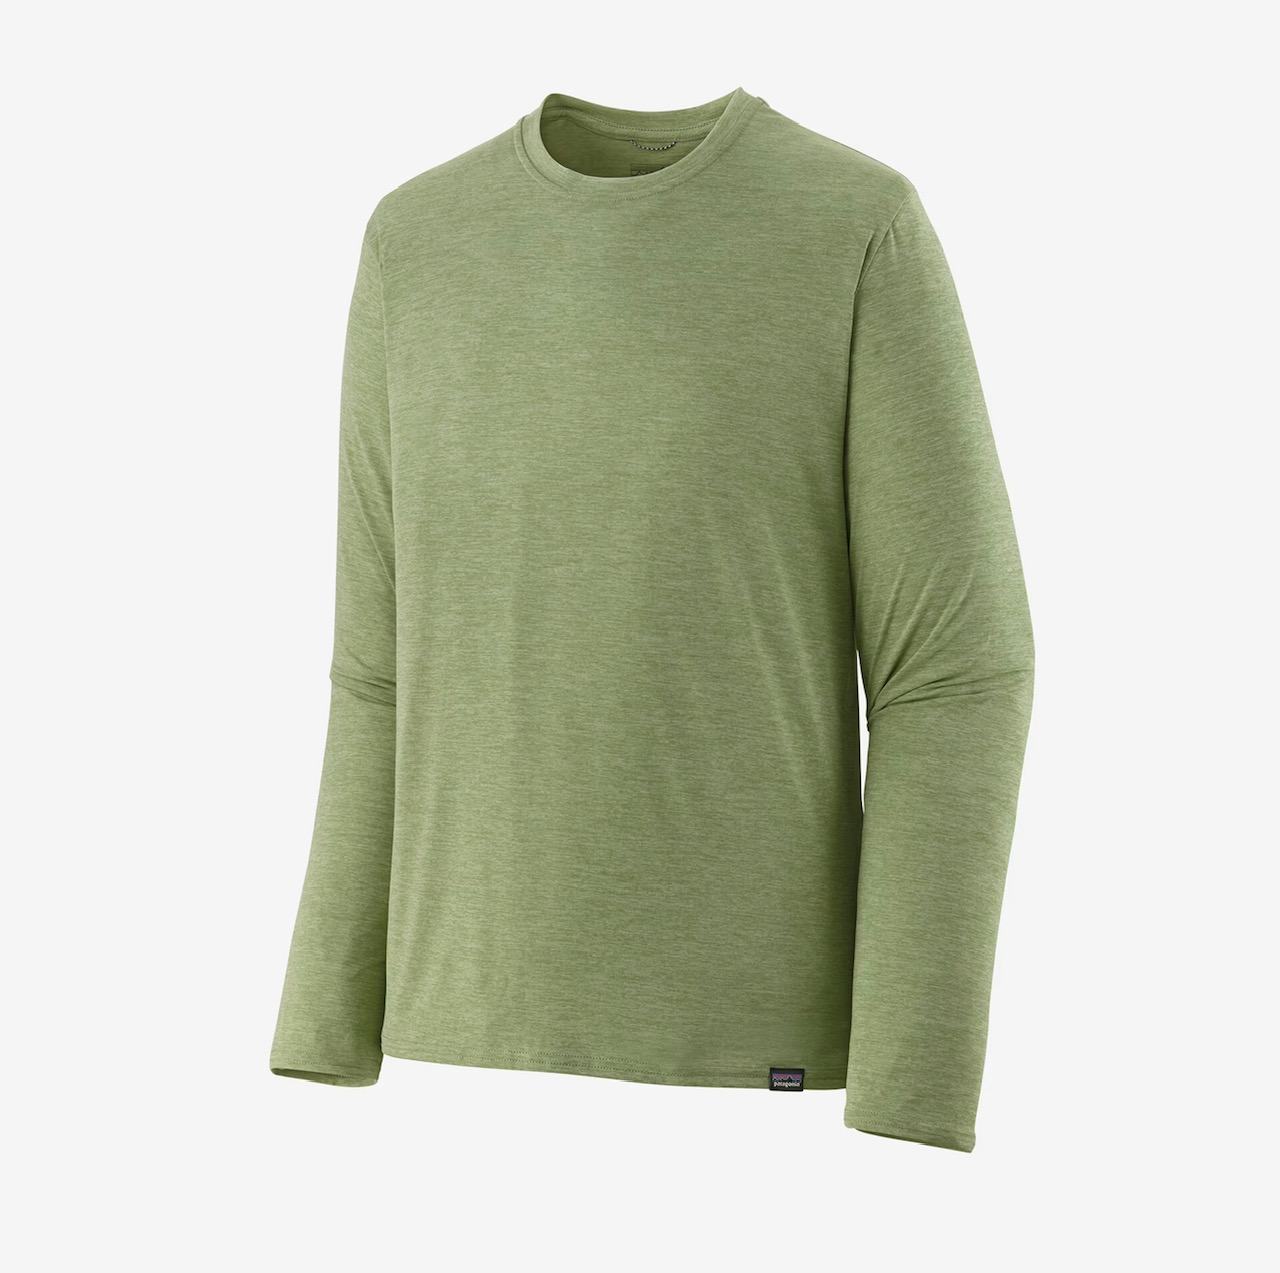 Patagonia M's L/S Capilene Cool Daily Shirt - Salvia Green: Dark Salvia Green X-Dye - Medium